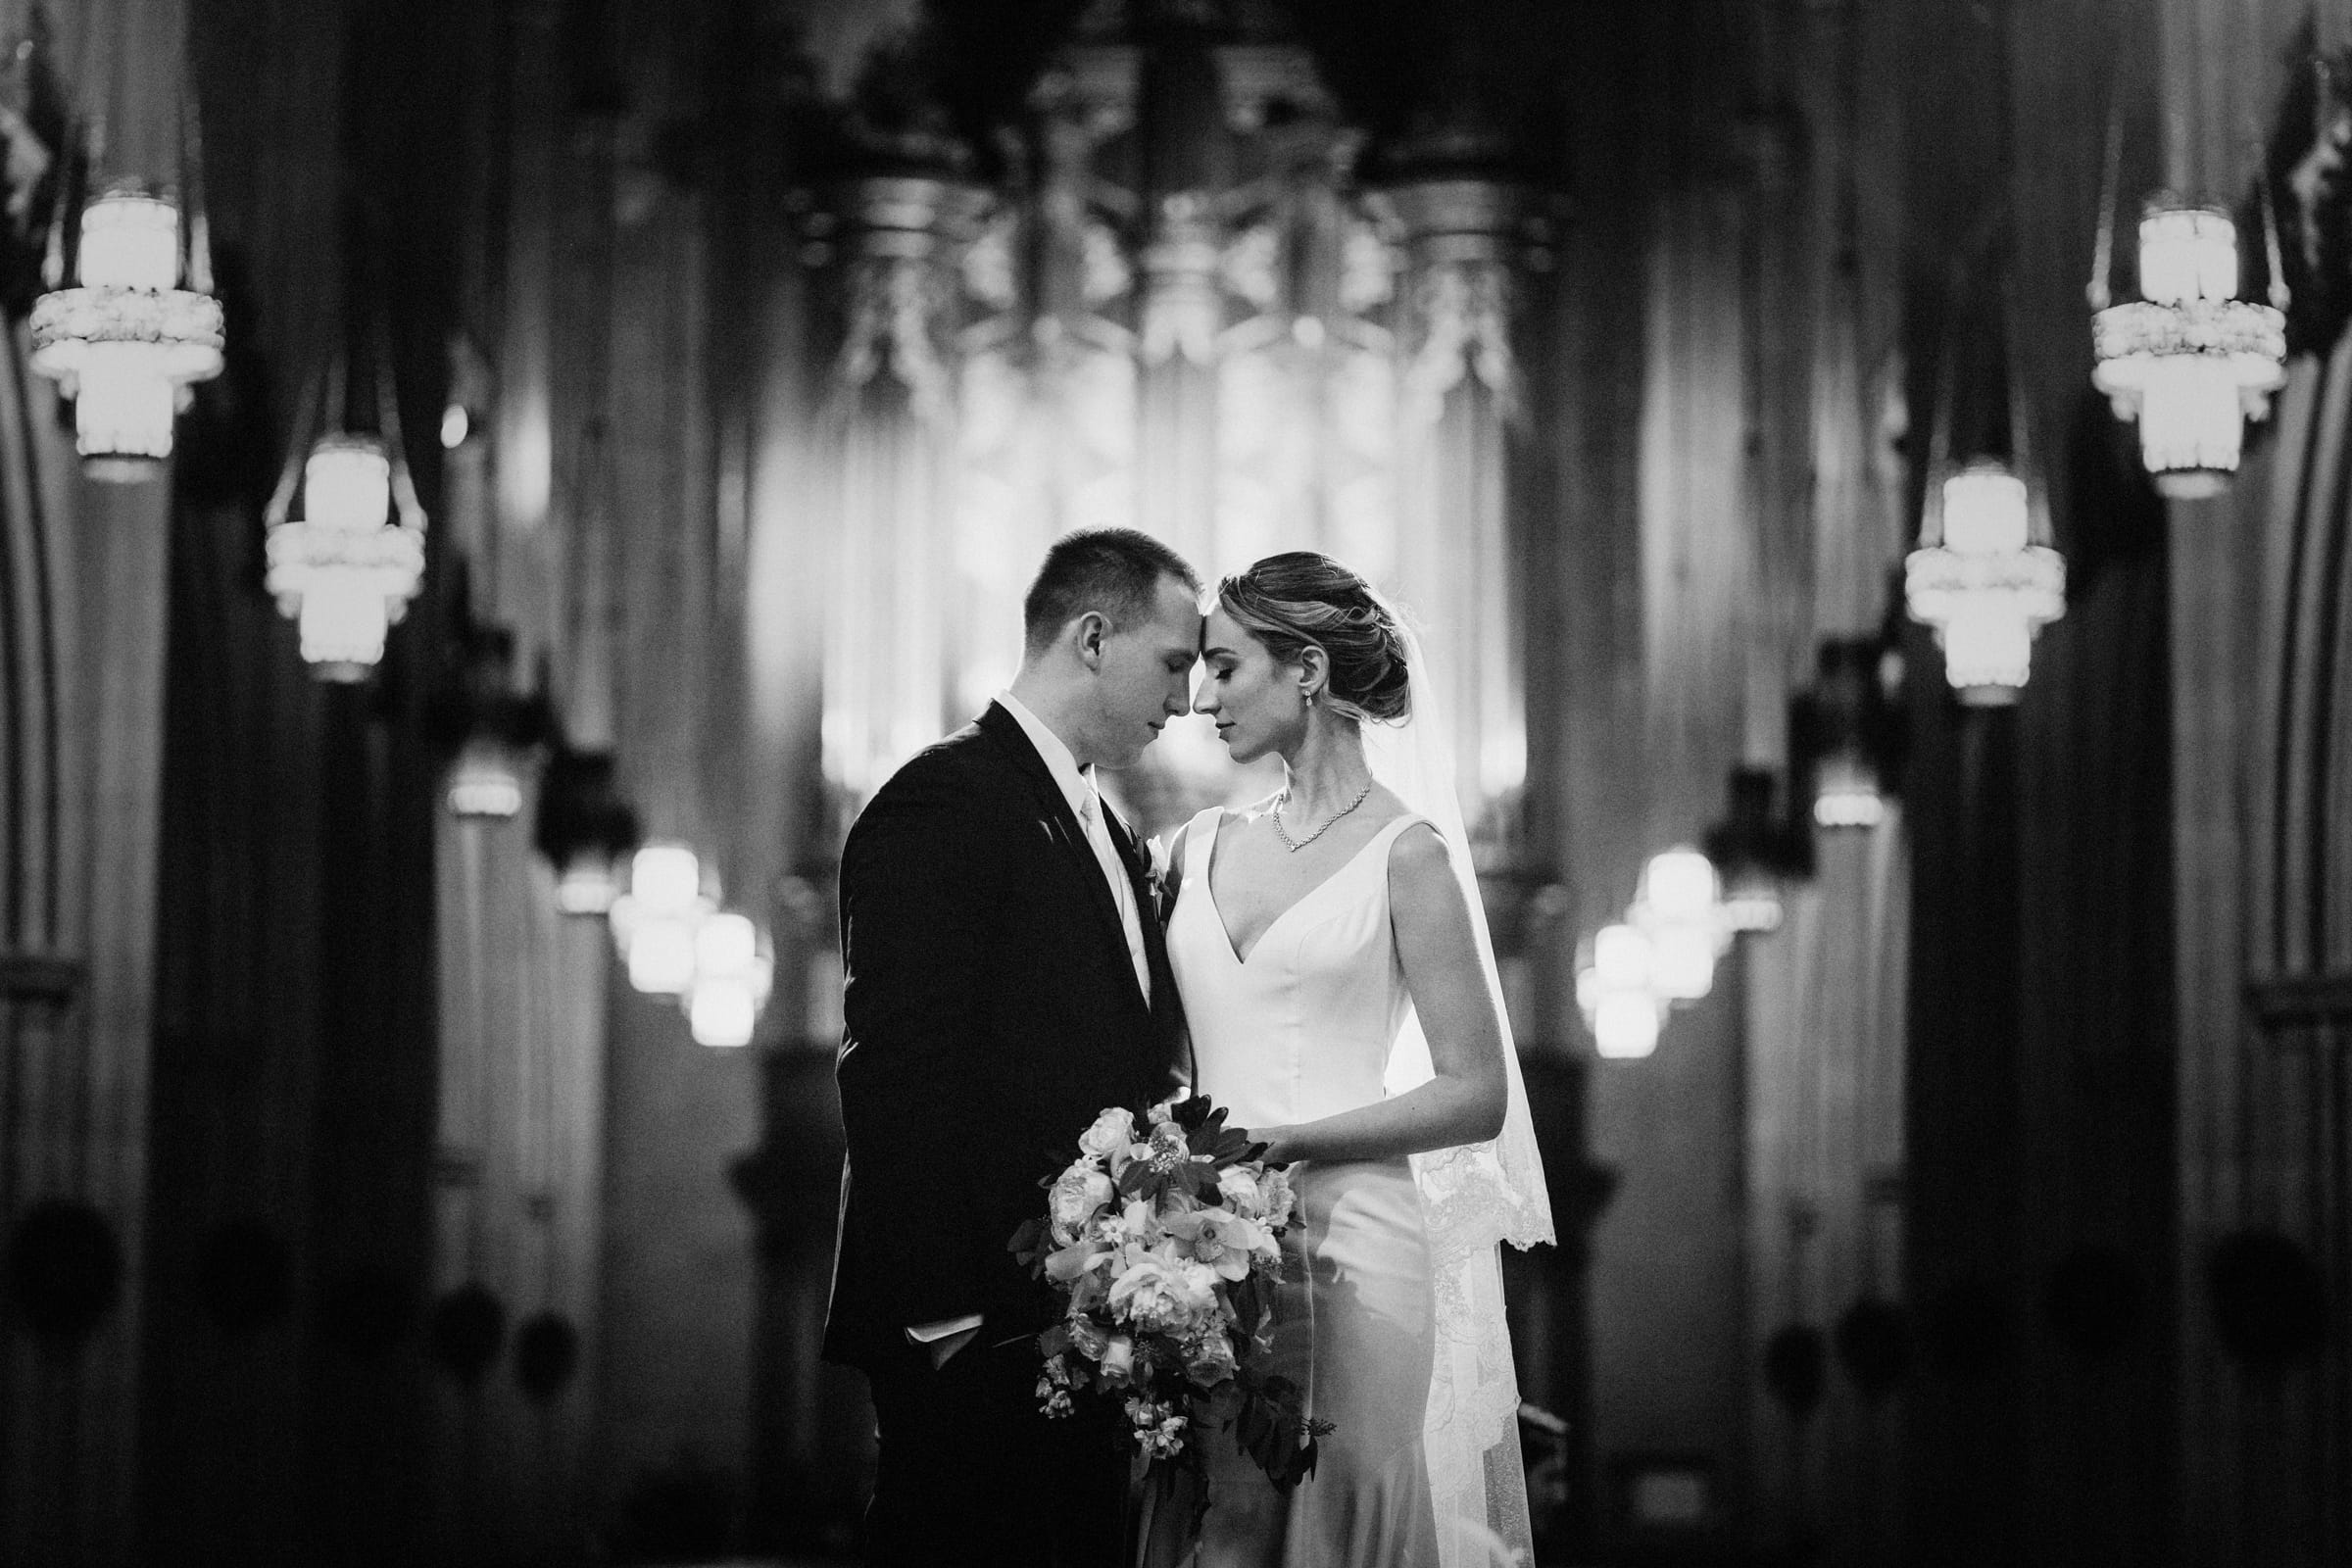 Raleigh Durham Wedding Photographer | Duke Chapel Wedding Portrait Bride & Groom B&W by Joe Payne Photography